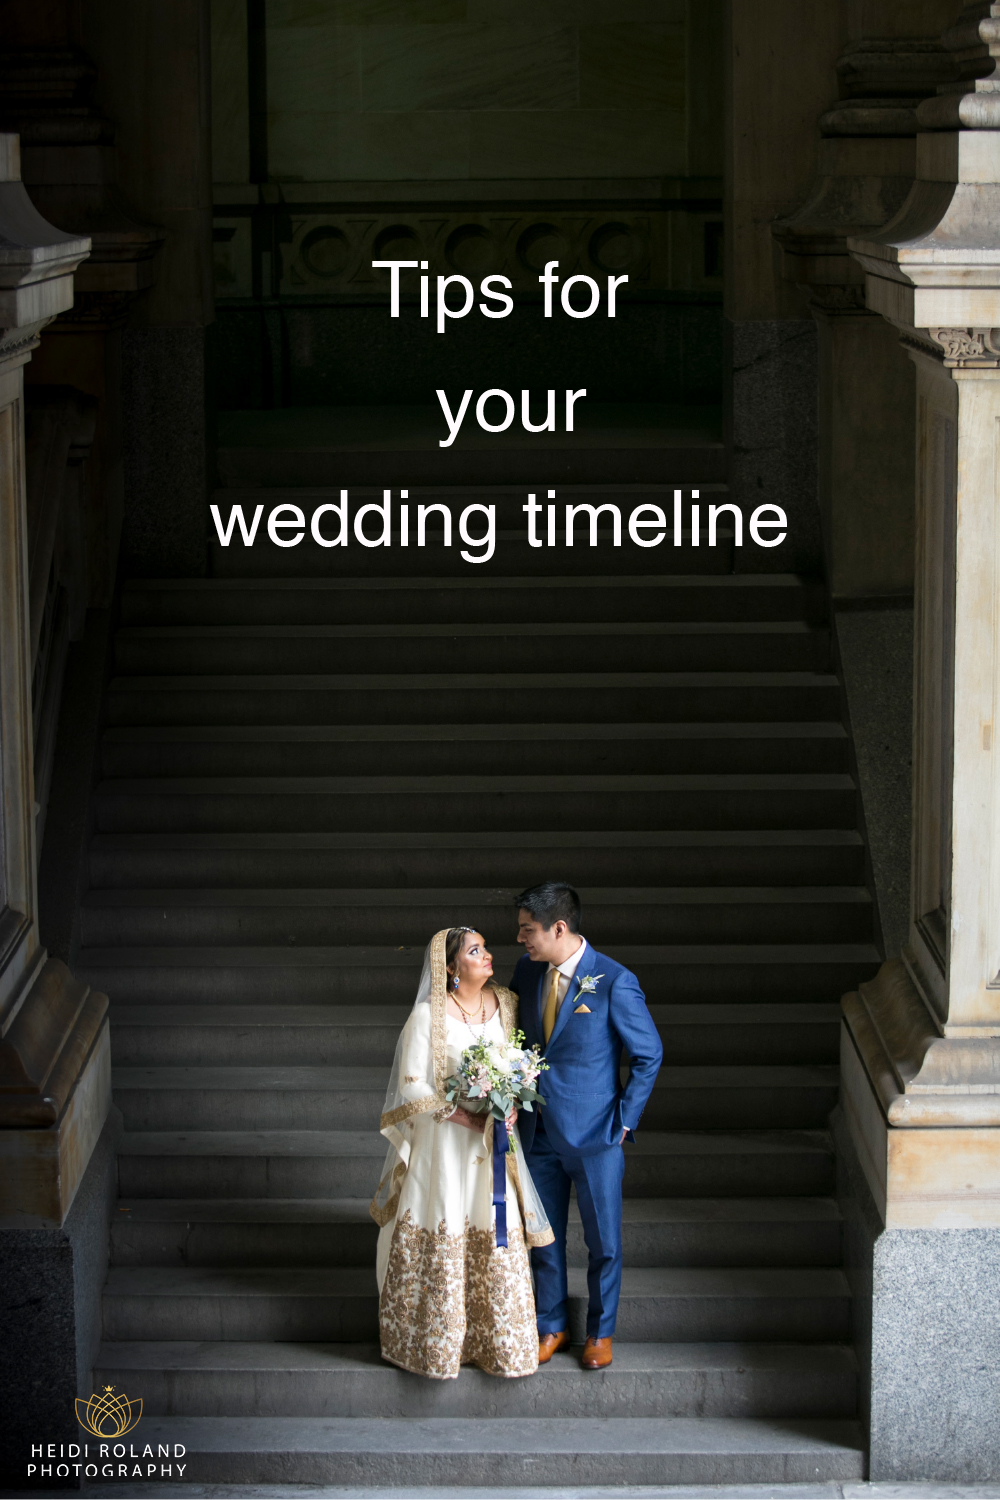 Tips for your wedding day timeline, City Hall Philadelphia